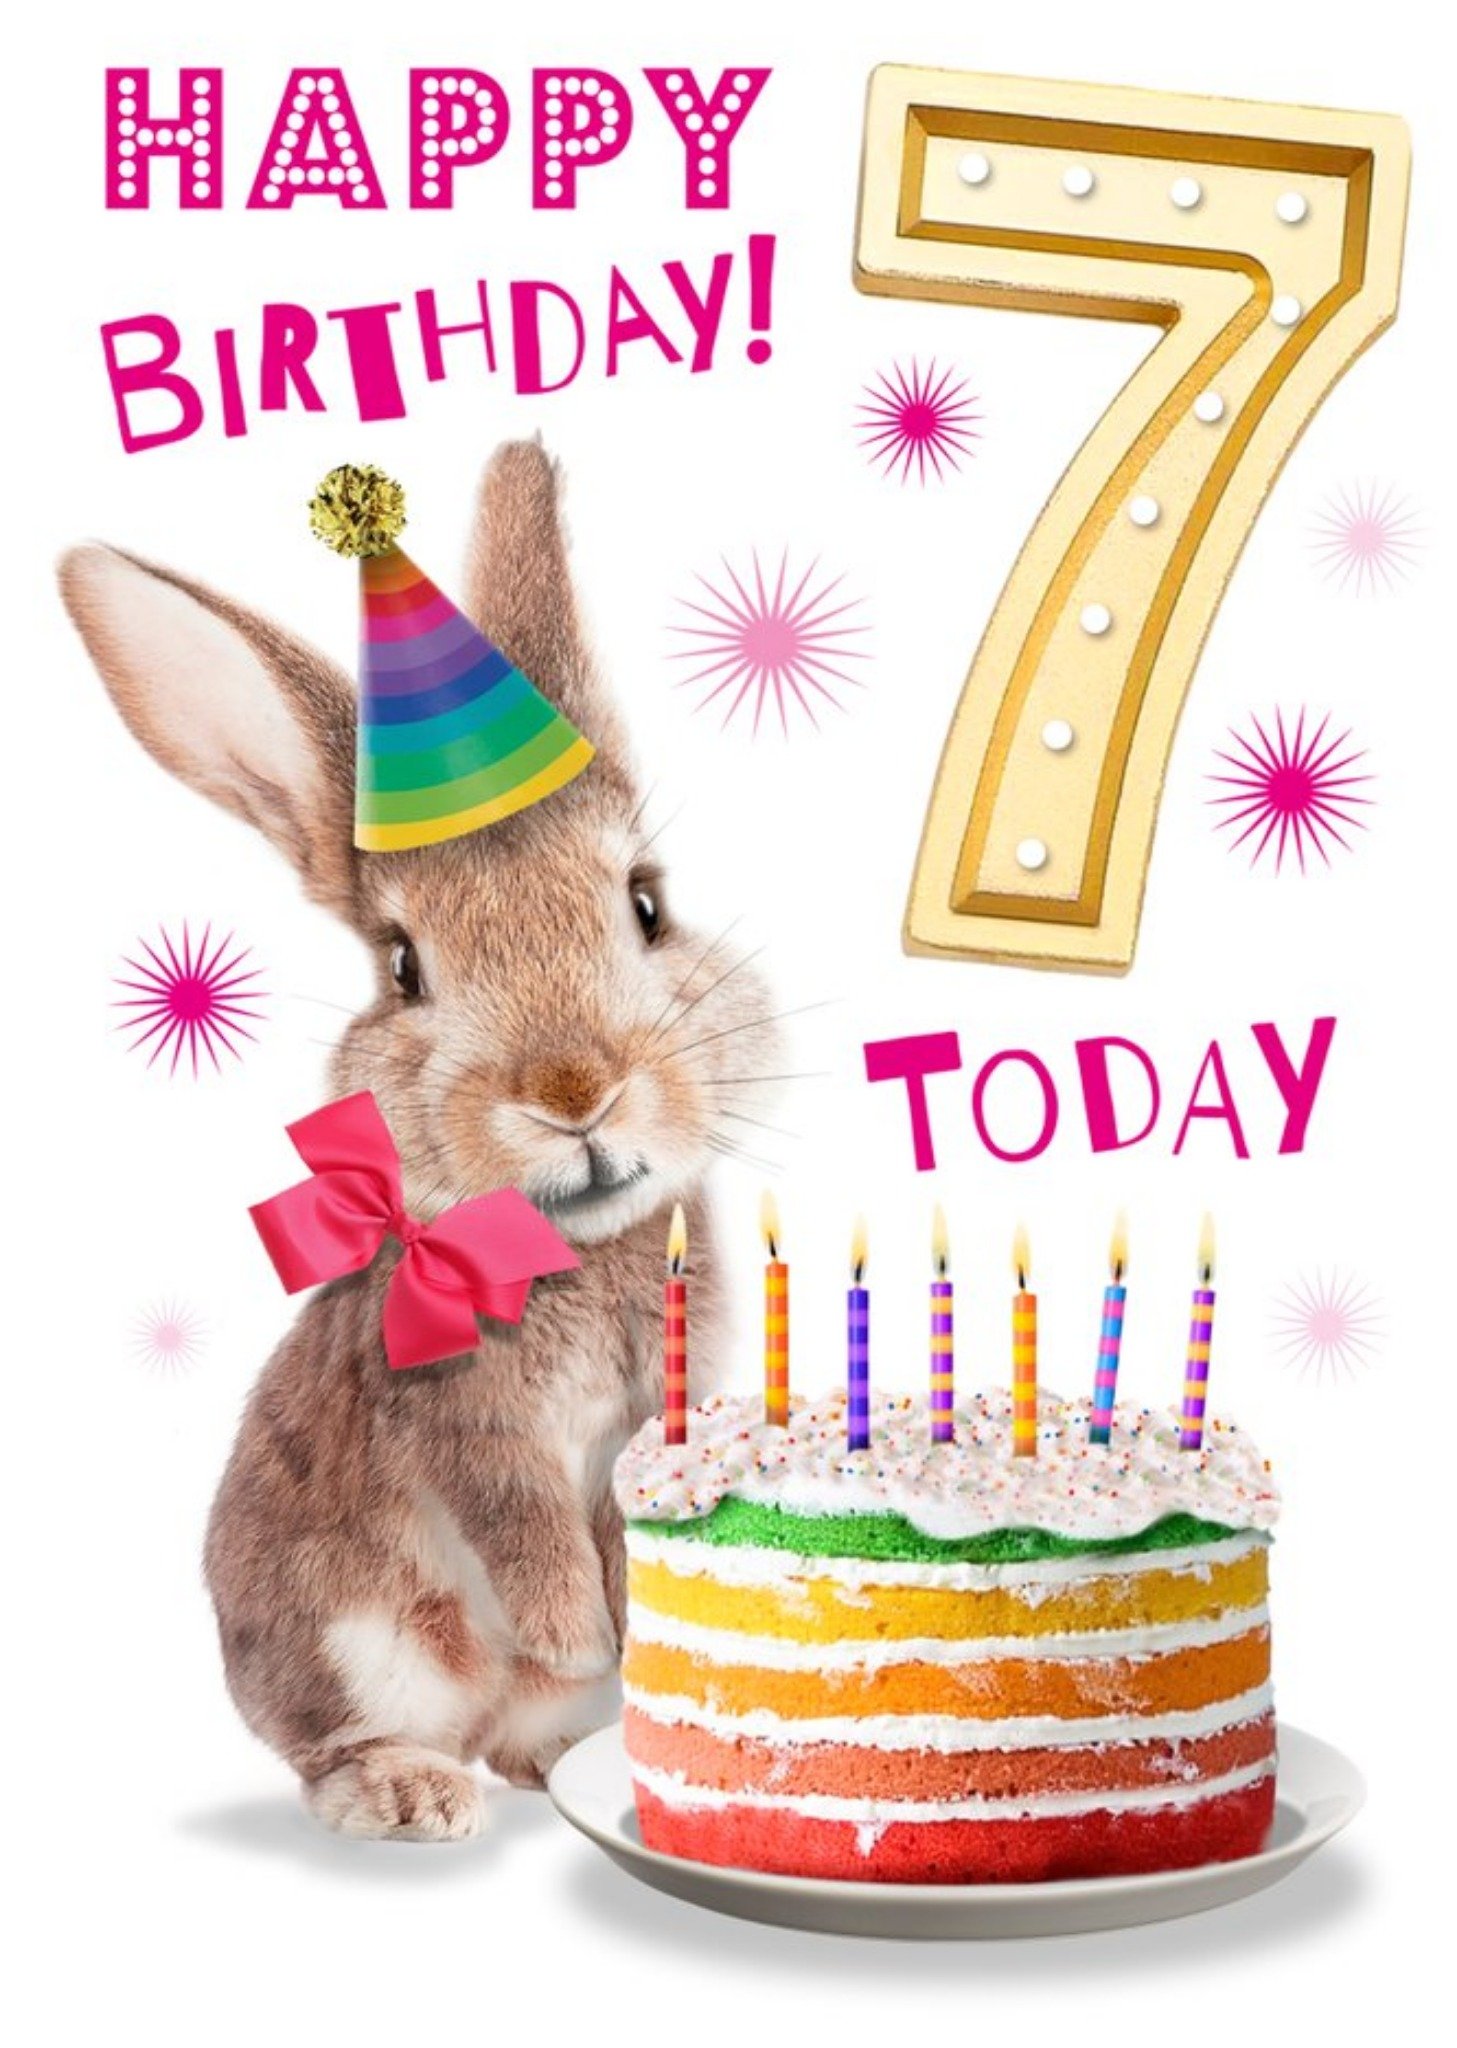 Moonpig Cute Rabbit With Cake 7th Birthday Card, Large